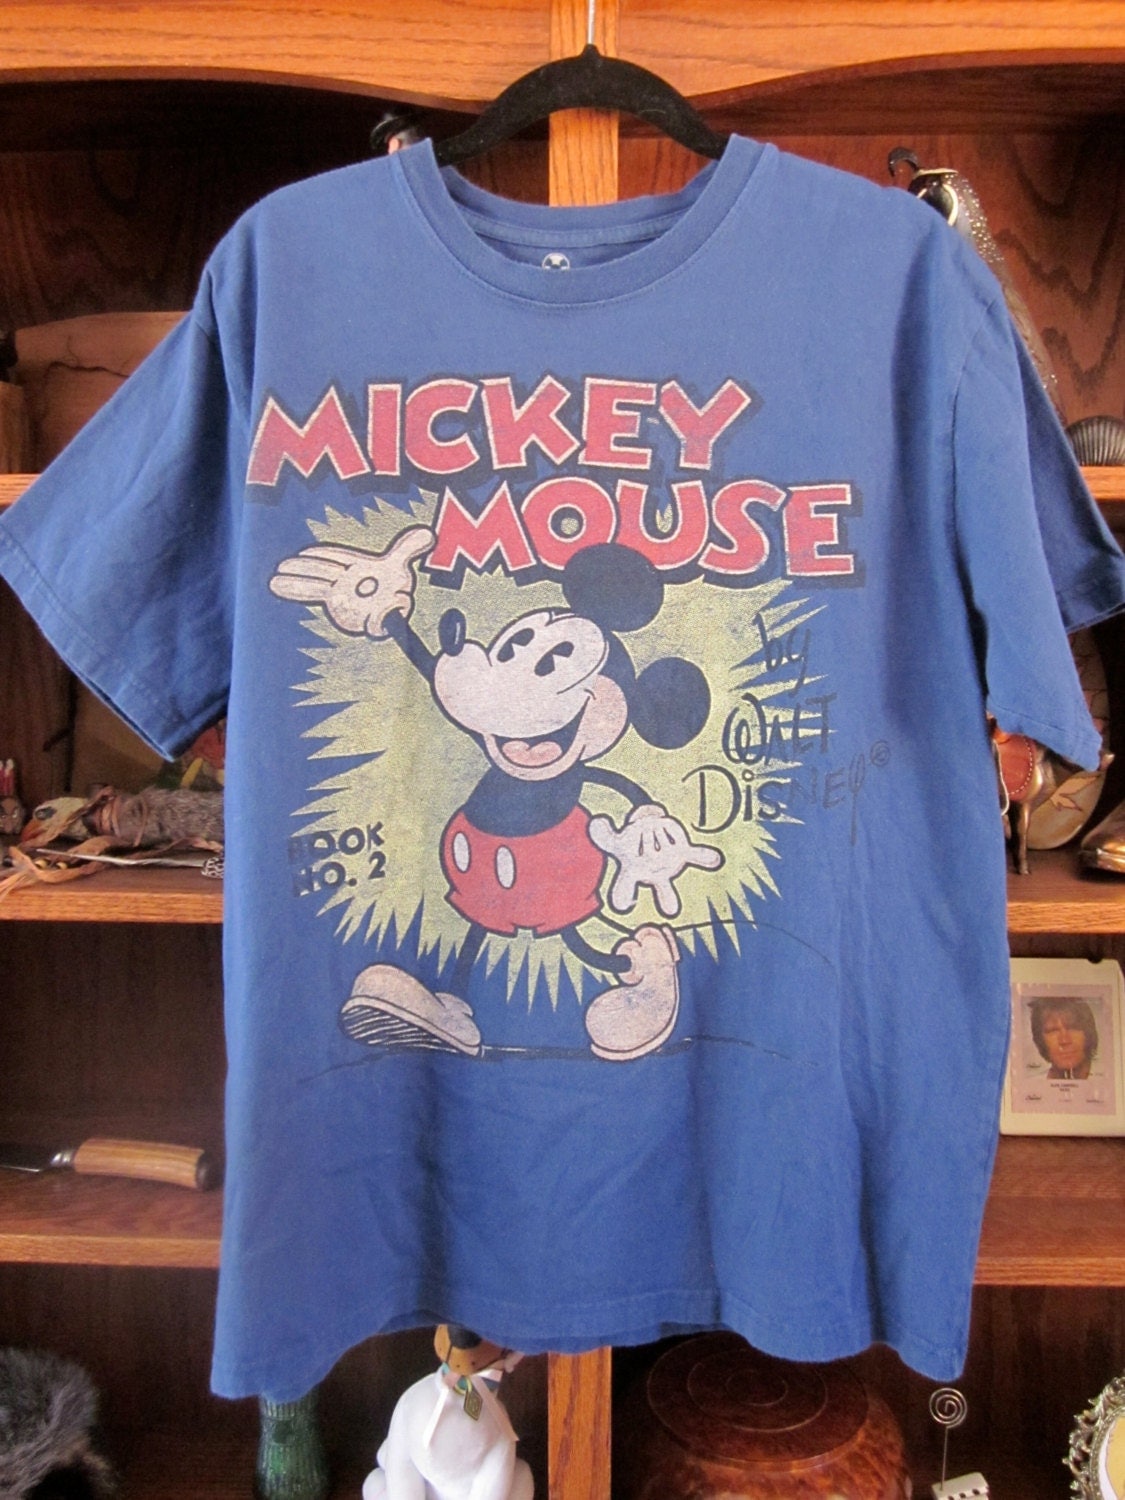 Mickey Mouse T Shirt Book No.2 Walt Disney by ChocolatePalomino